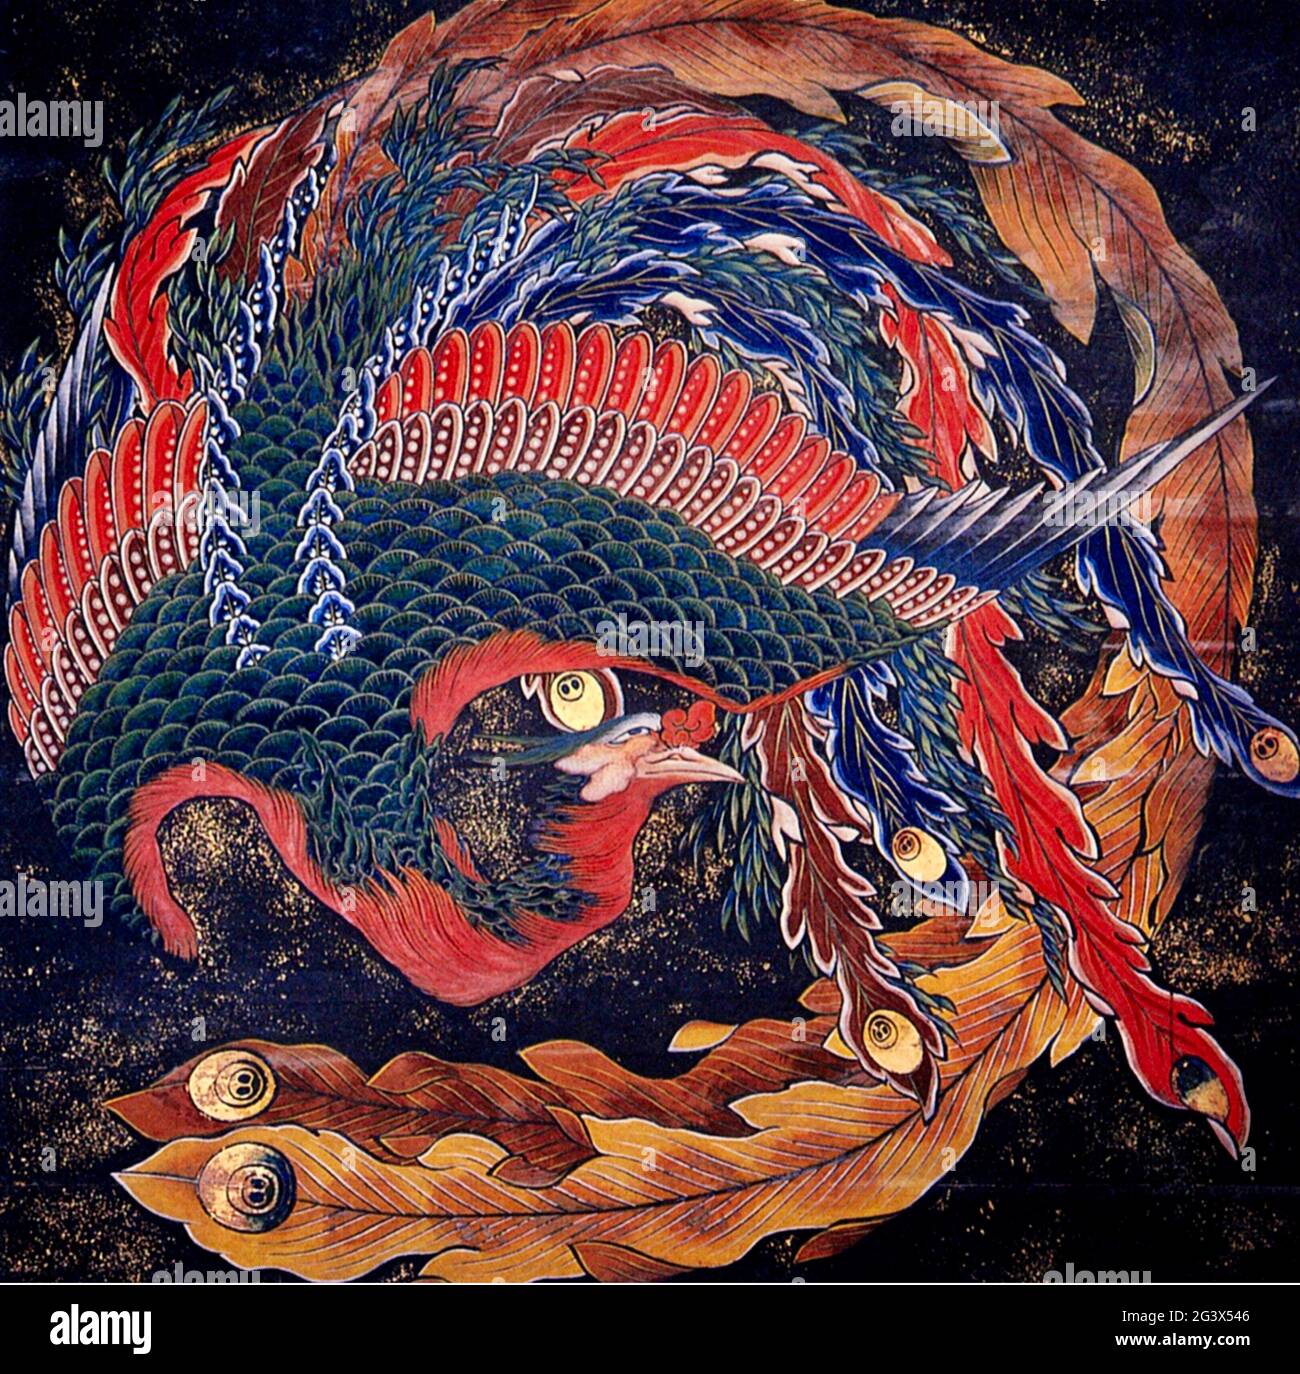 Phoenix That Glares In All Directions By Katsushika Hokusai Stock Photo